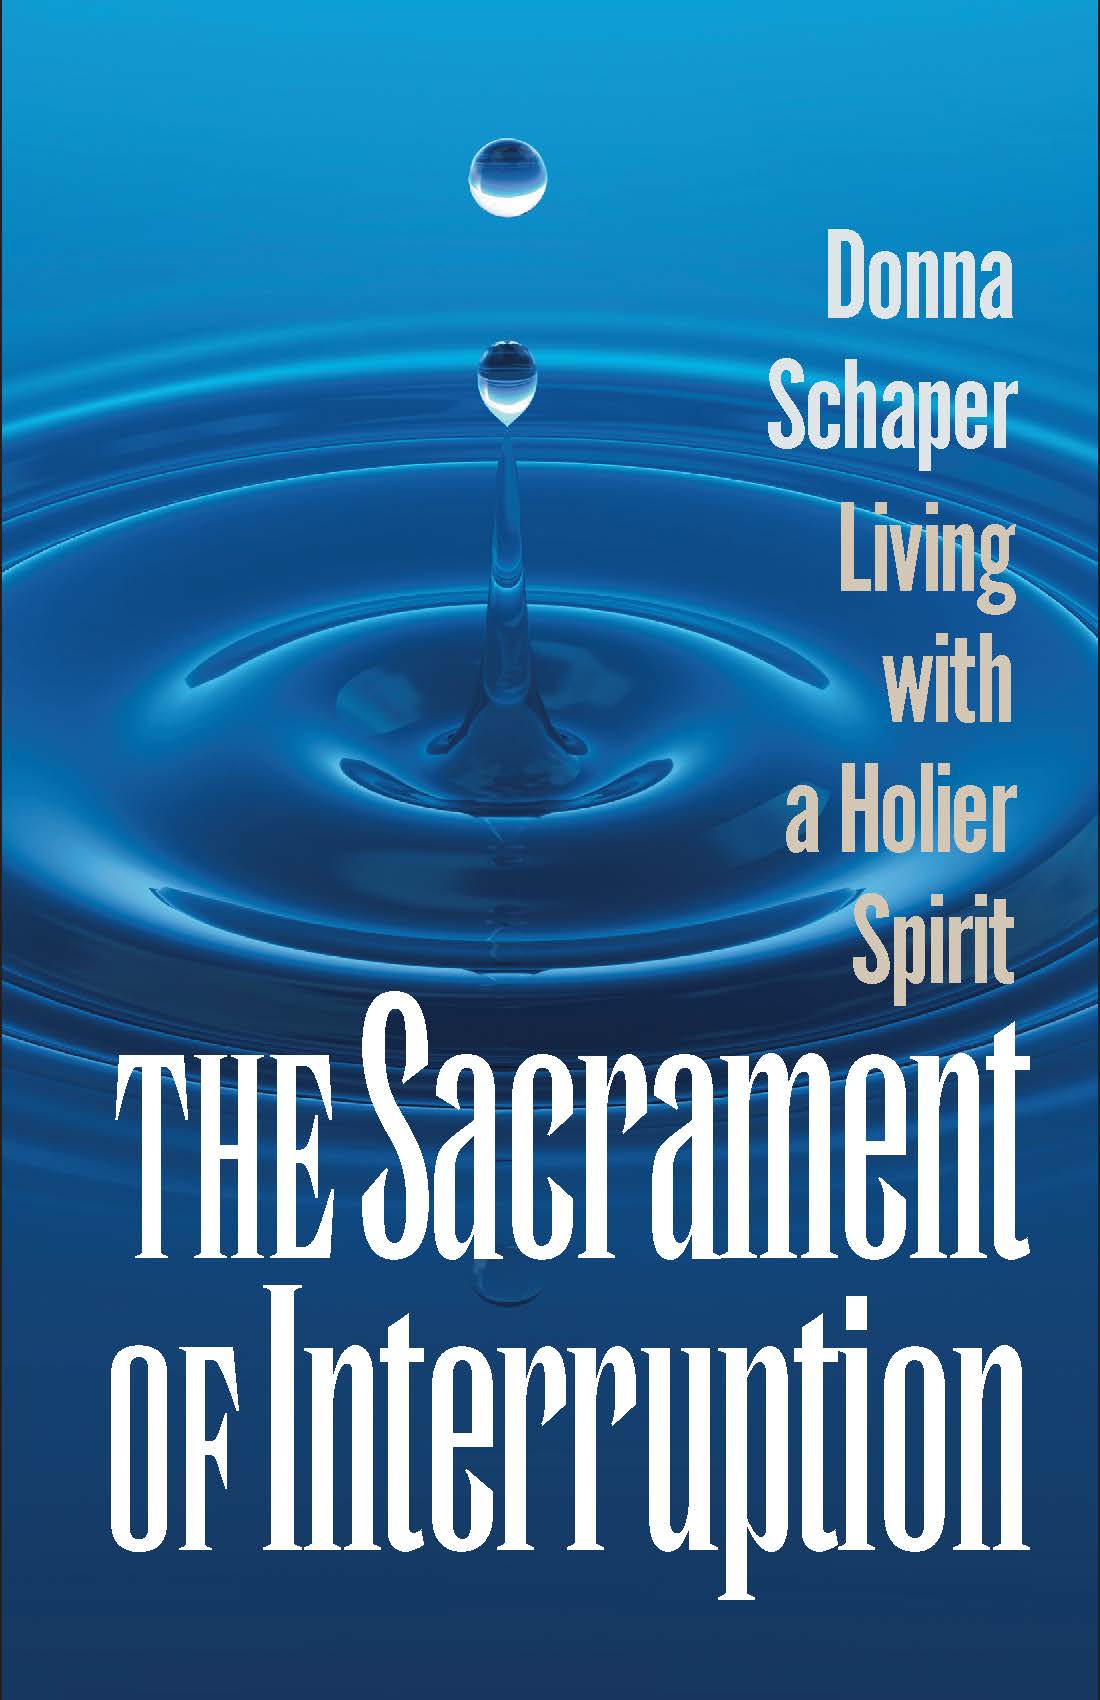 The Sacrament of Interruption